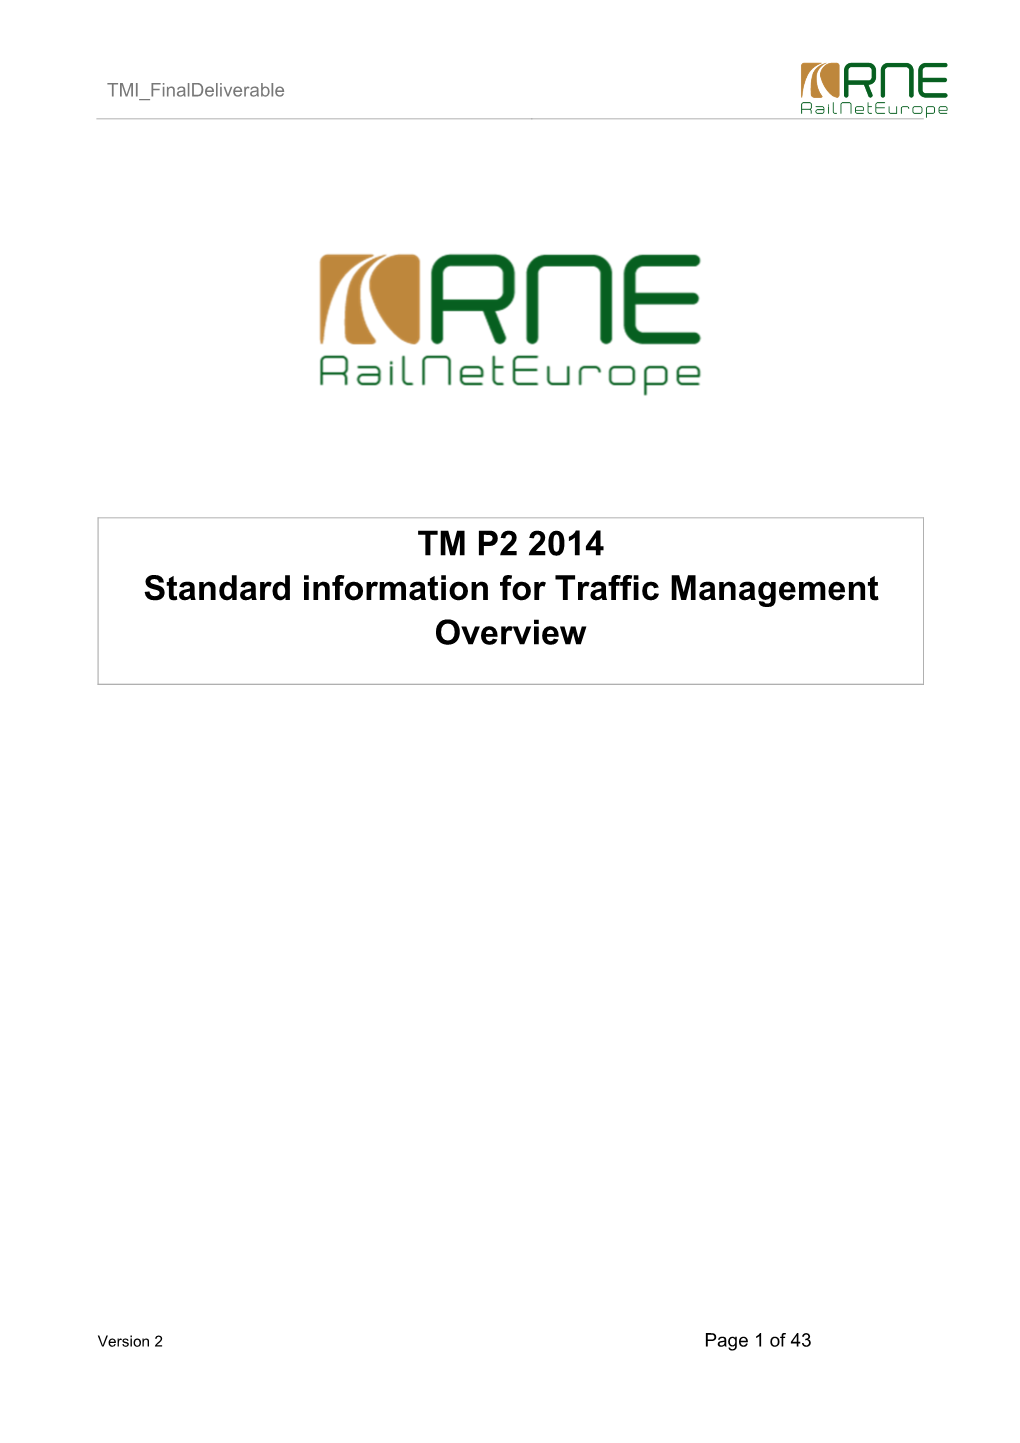 TM P2 2014 Standard Information for Traffic Management Overview